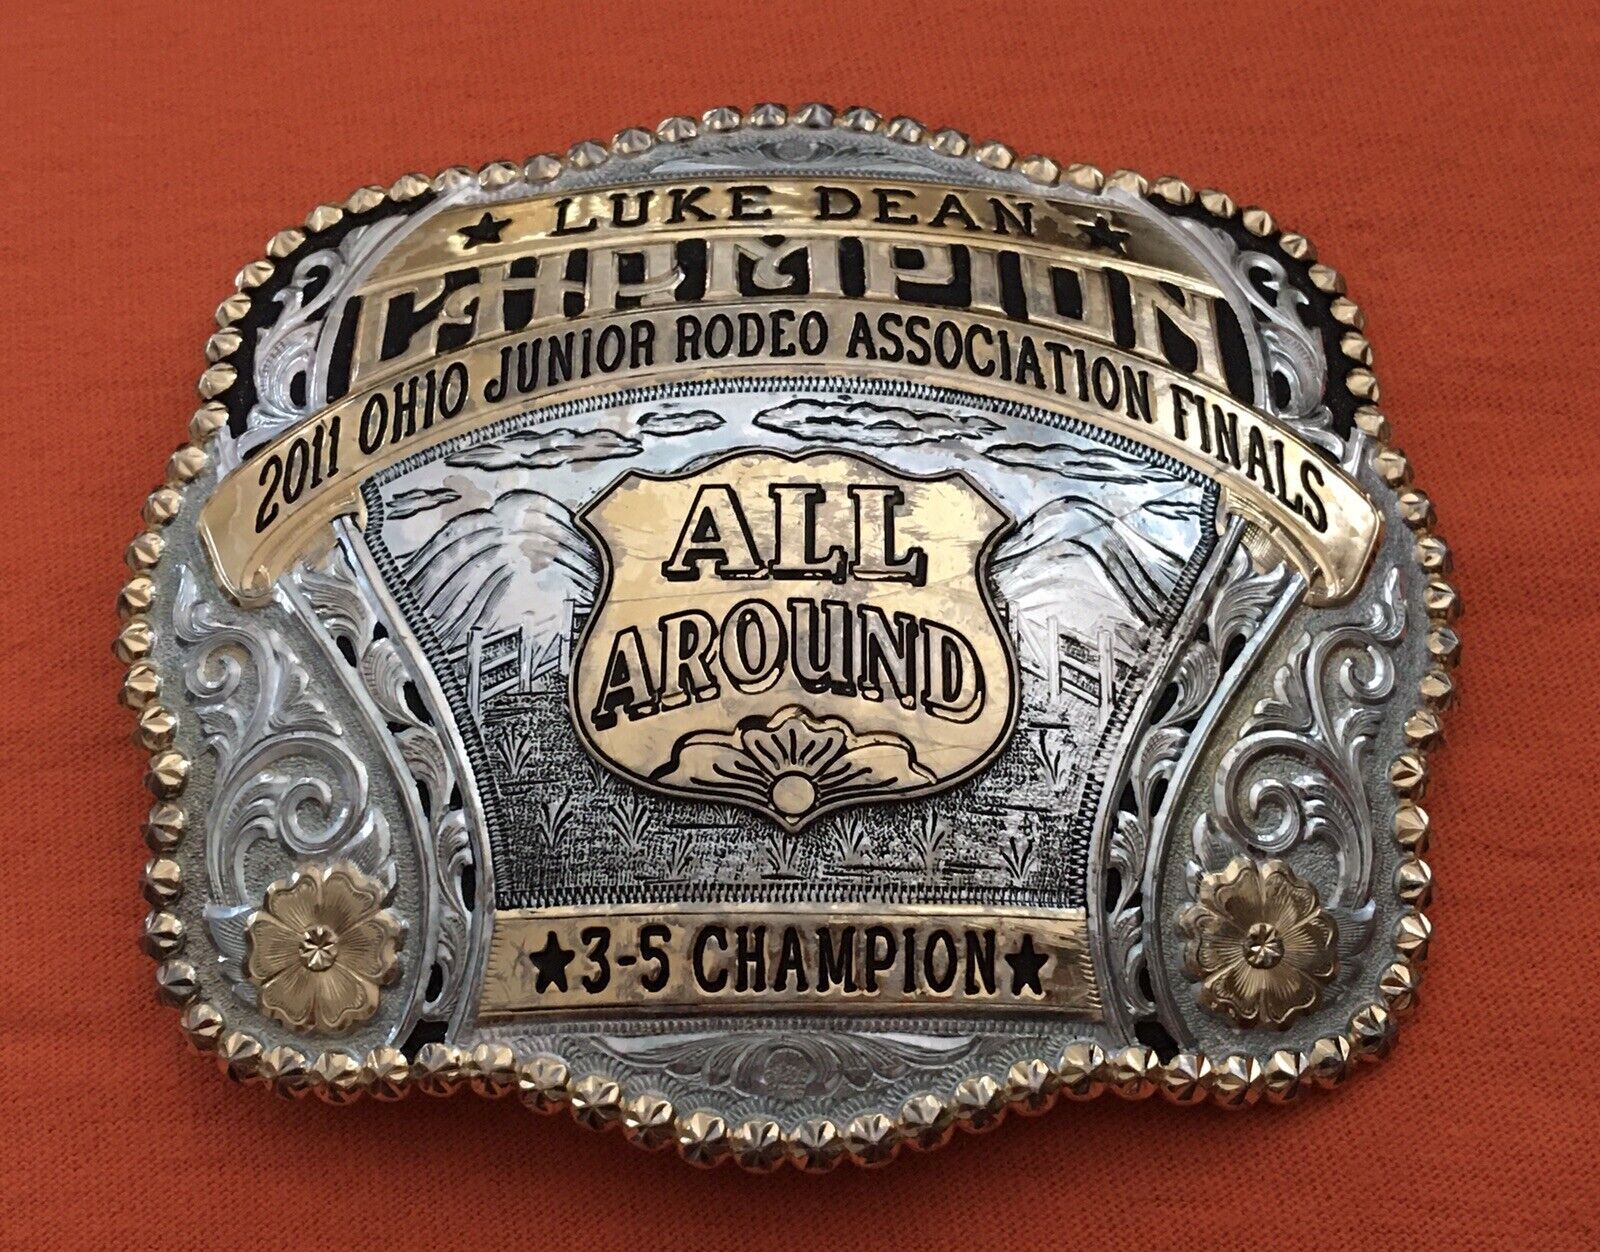 2011 Ohio Jr Rodeo Finals 3-5 Champion All Around Cowboy Gist Trophy Belt Buckle